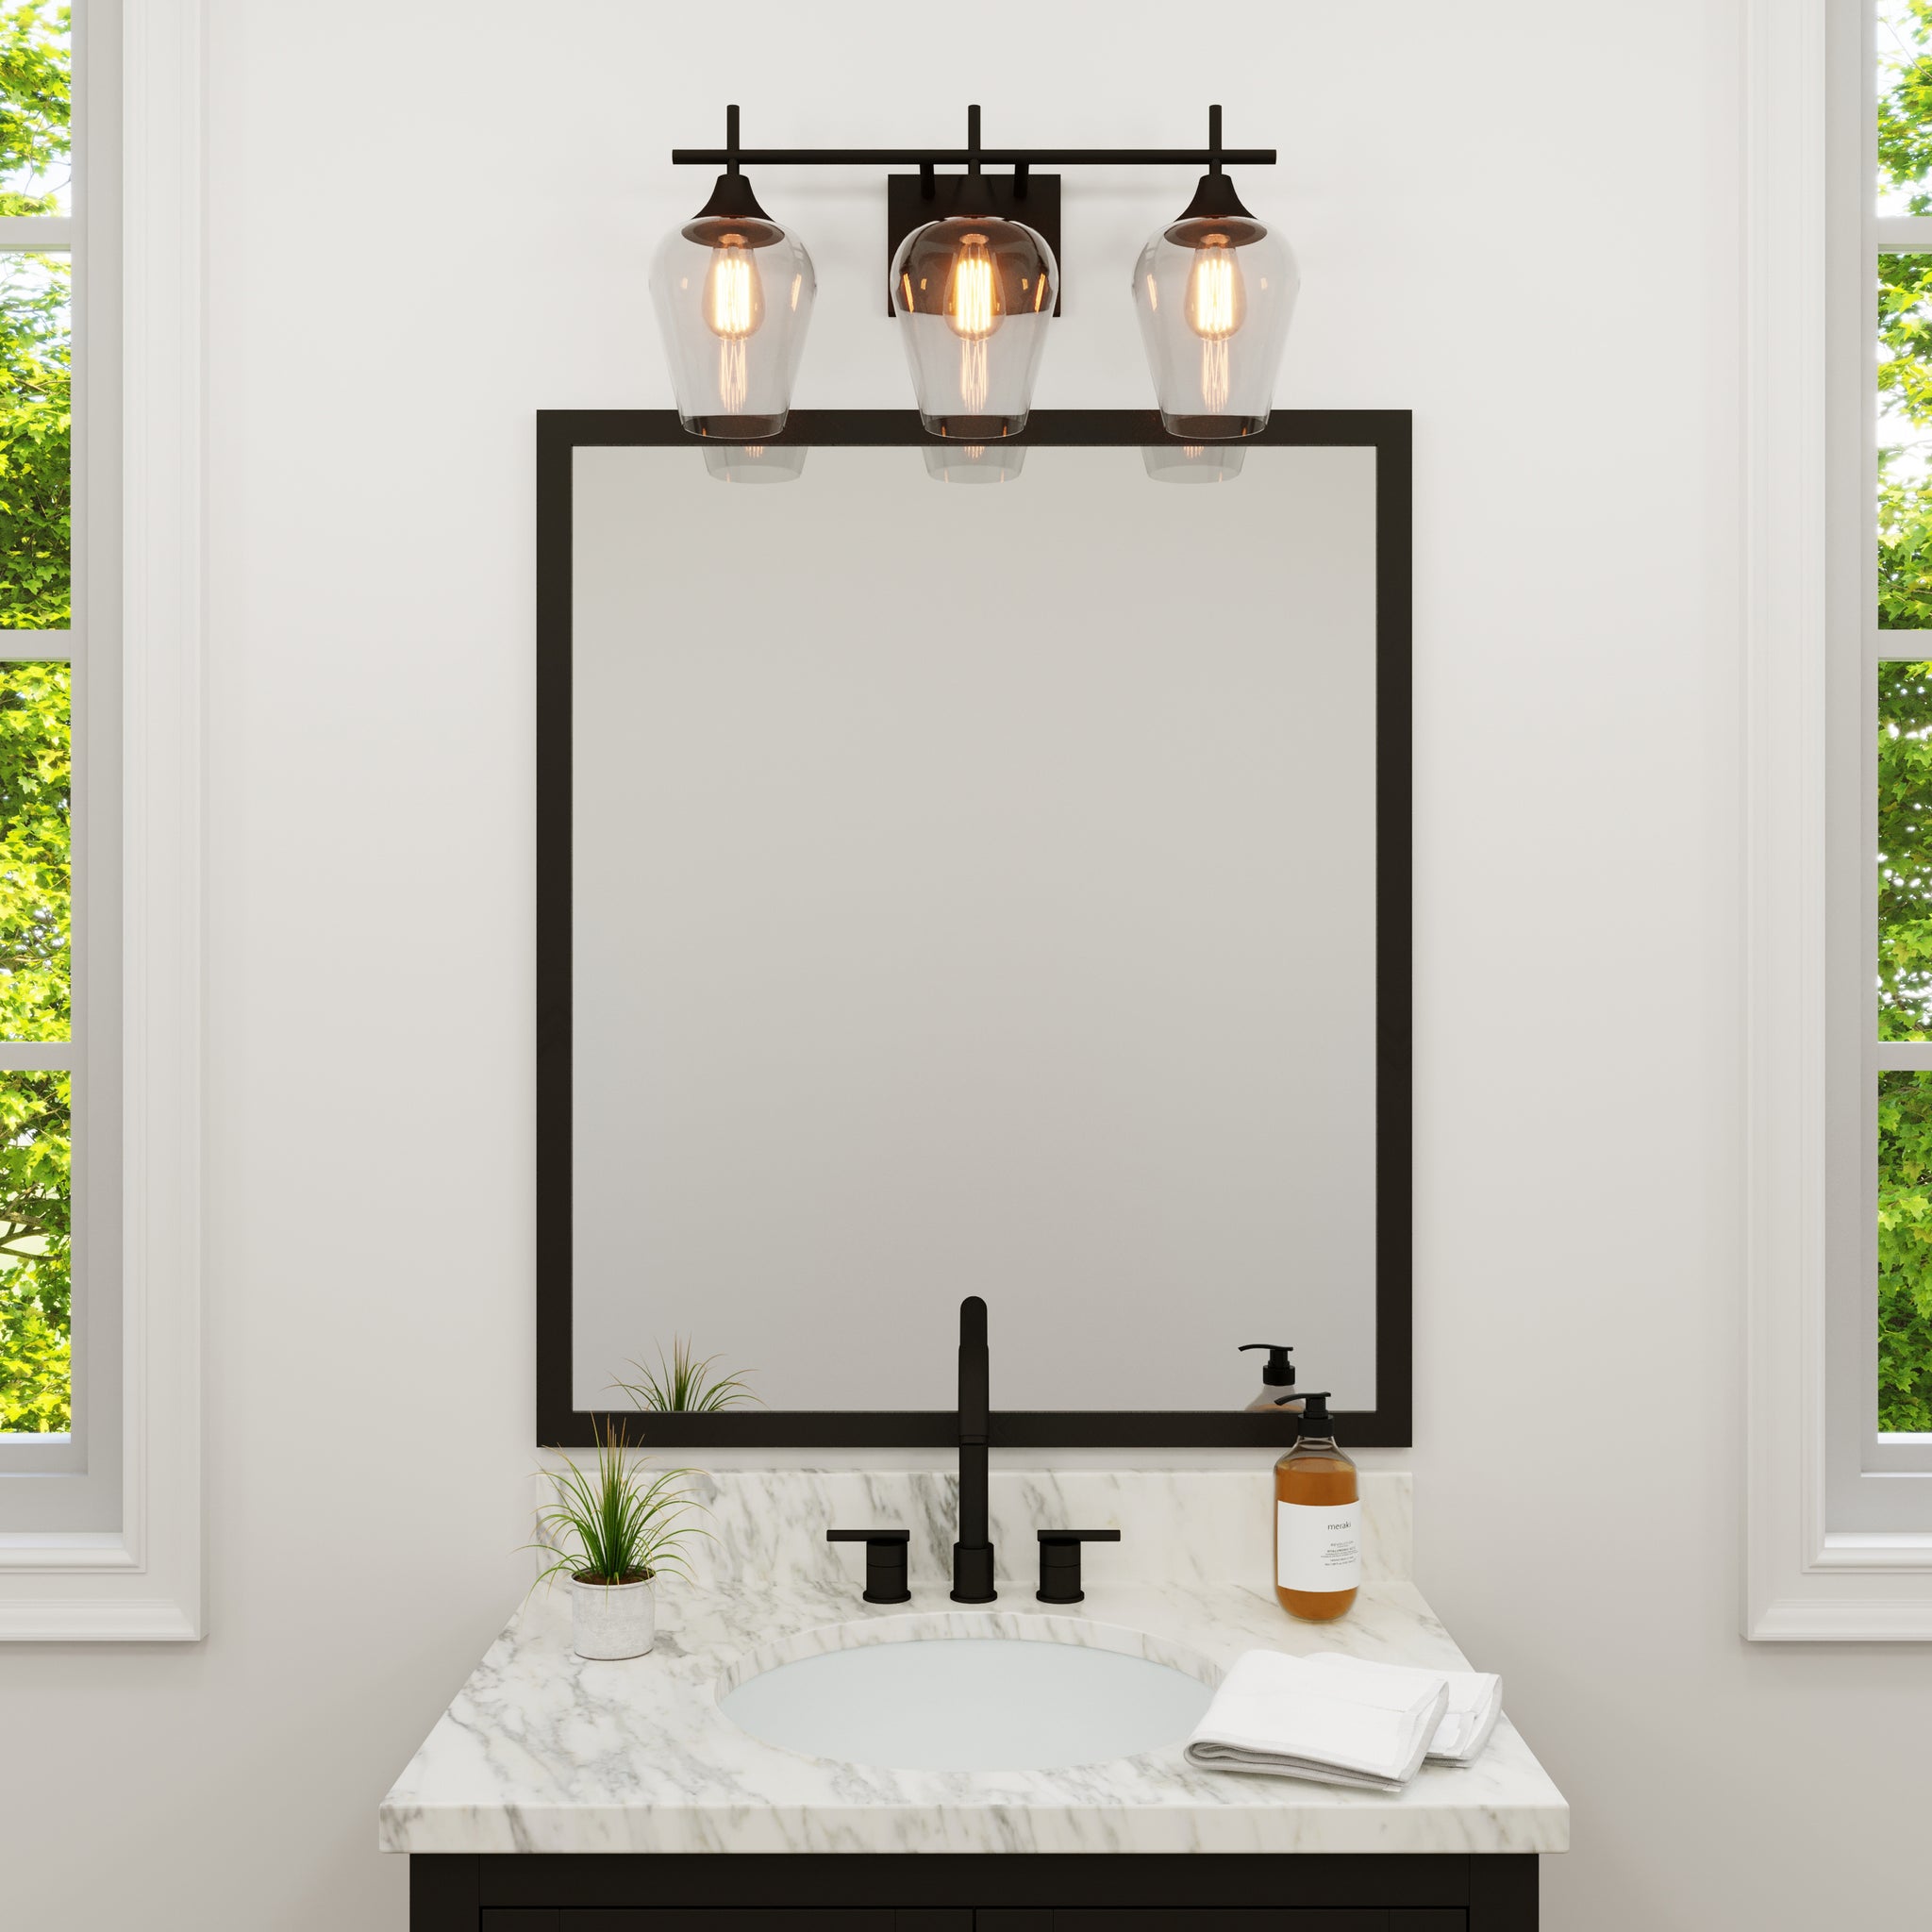 Emma - Large Black Metal 3-Light Bathroom Vanity Light with Clear